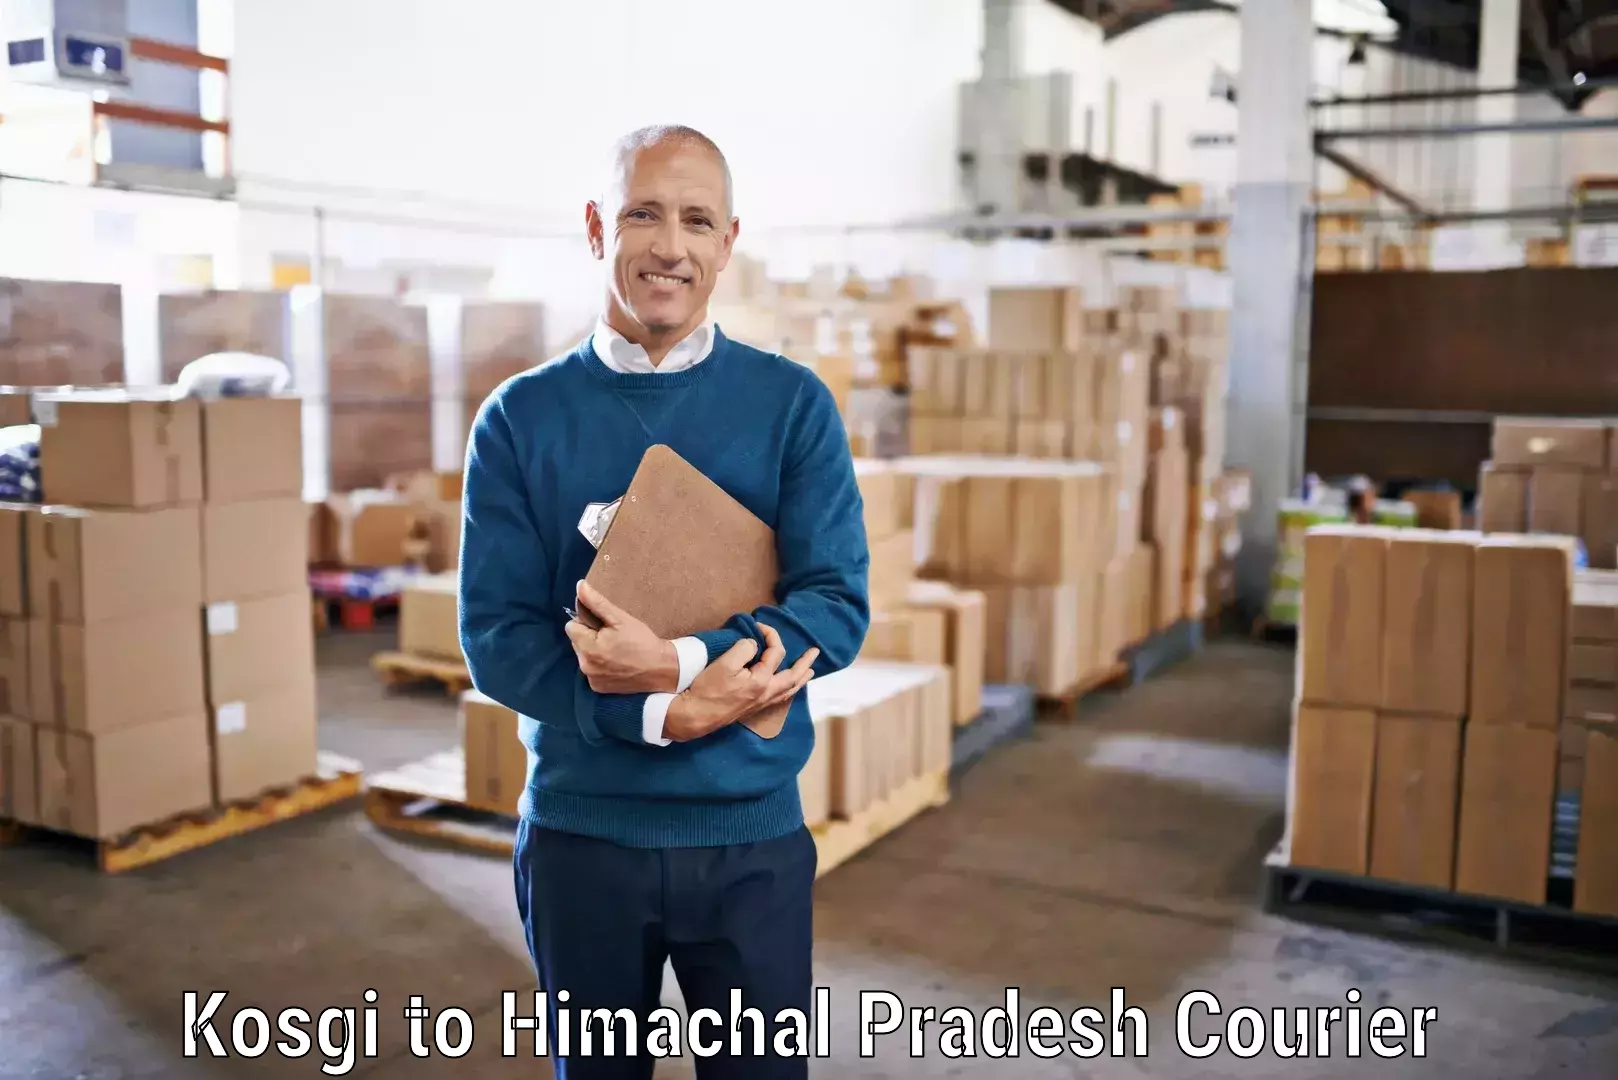 Nationwide courier service Kosgi to Himachal Pradesh